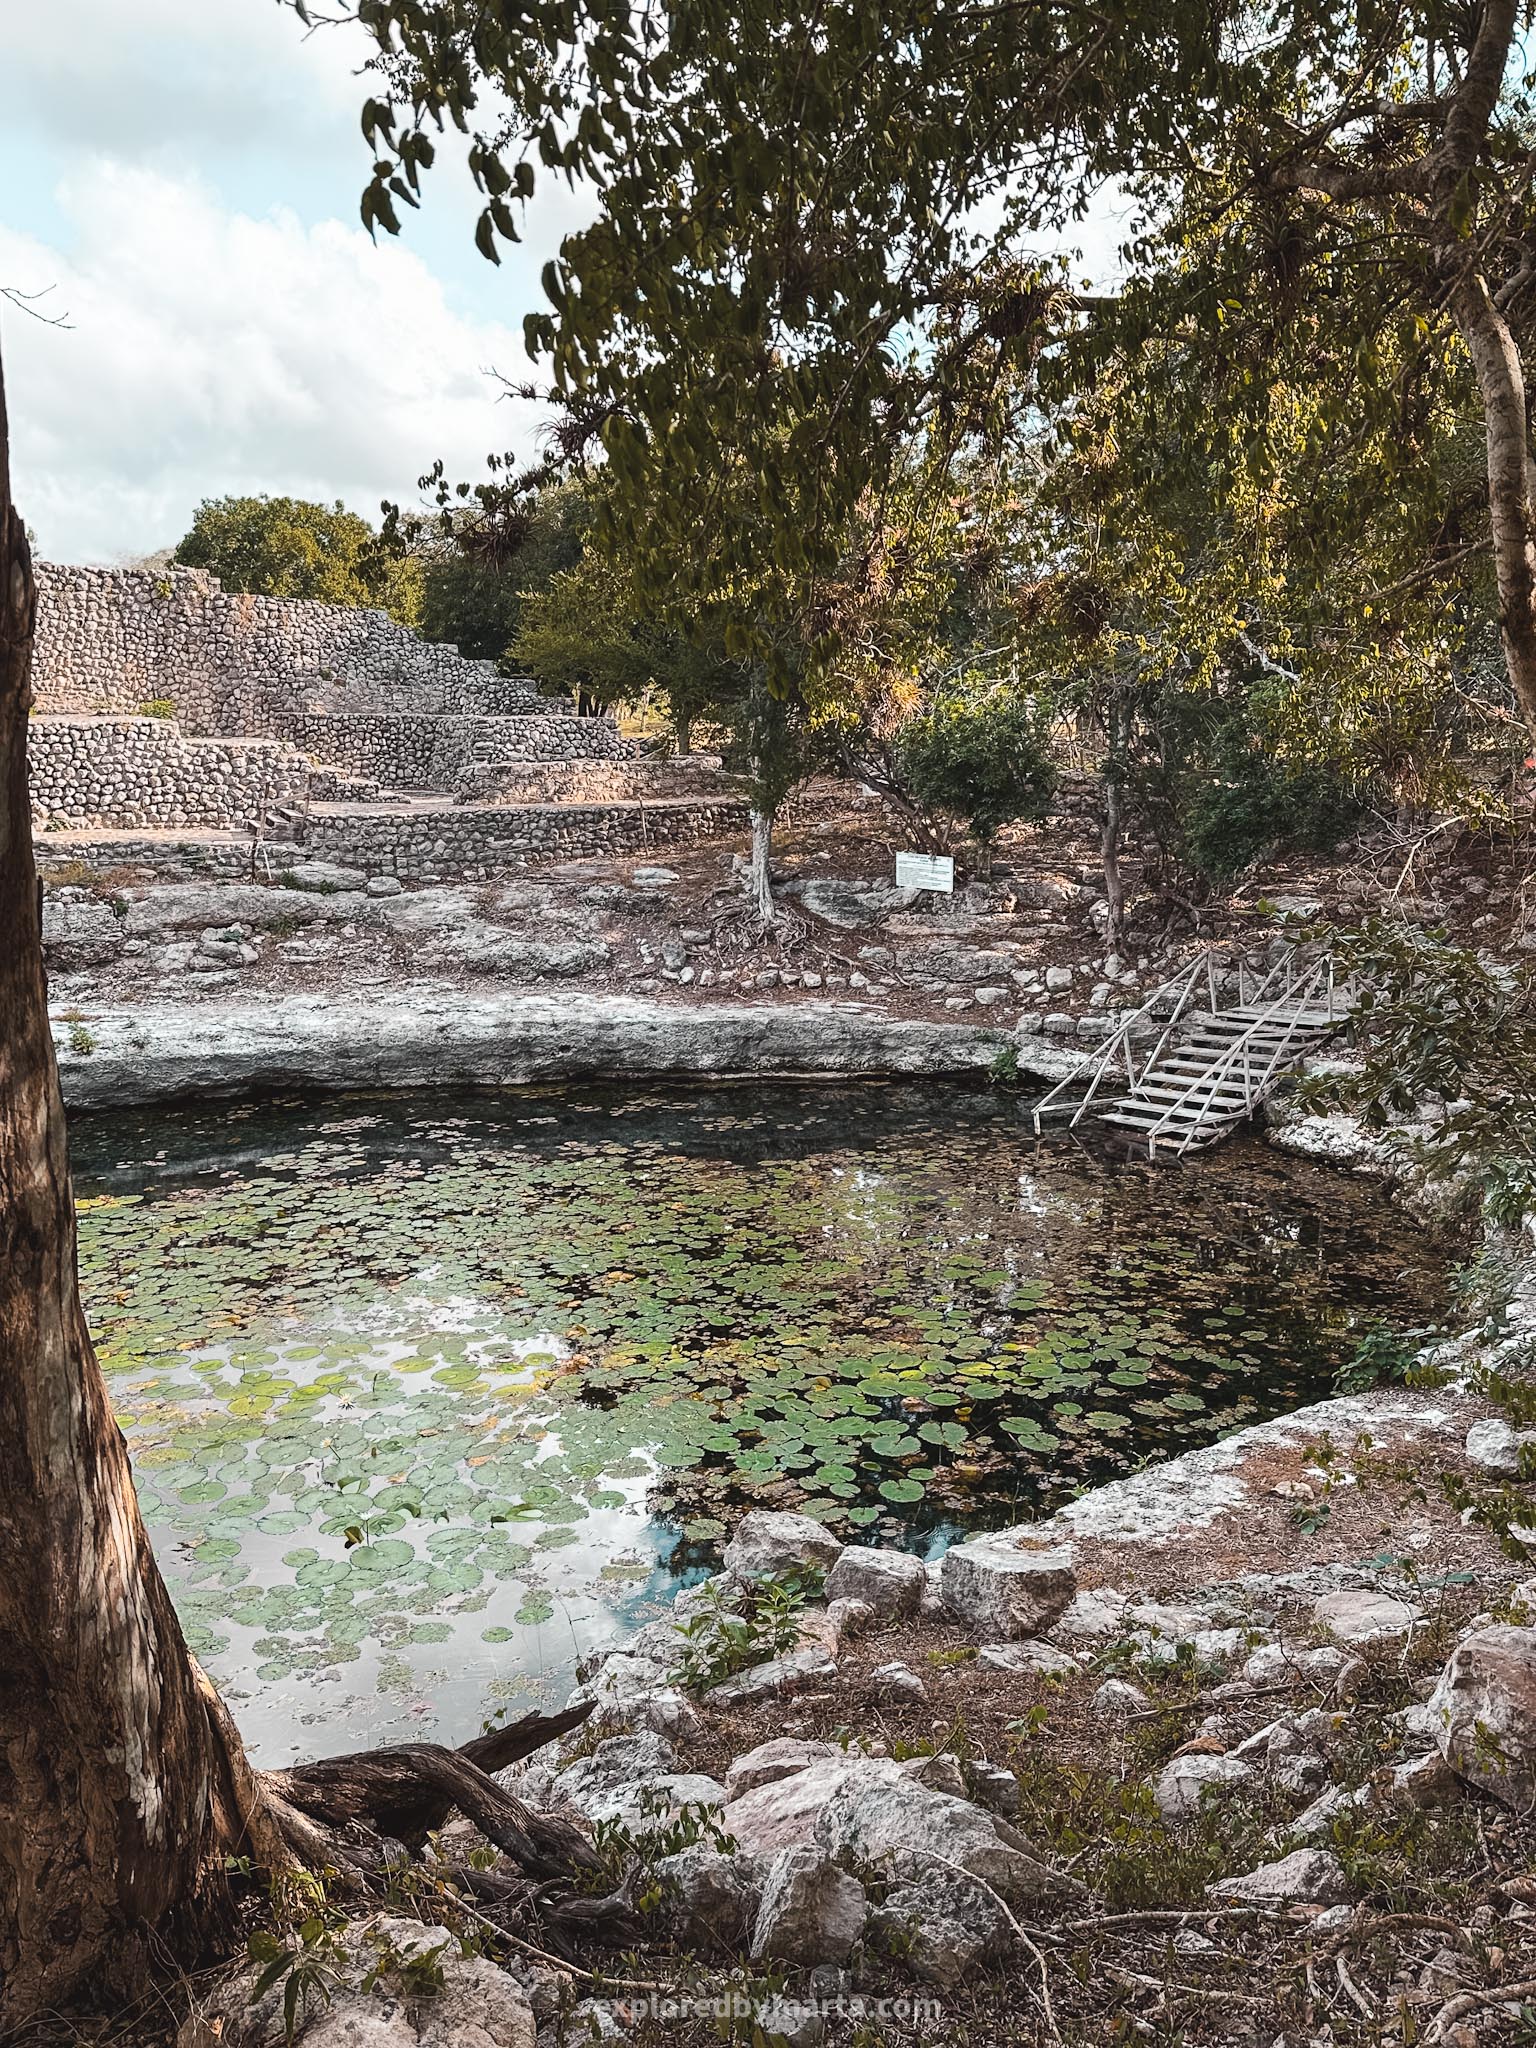 Yucatan peninsula, Mexico - Mayan pyramids and Mayan ruins near Merida - Dzibilchaltun archaeological zone